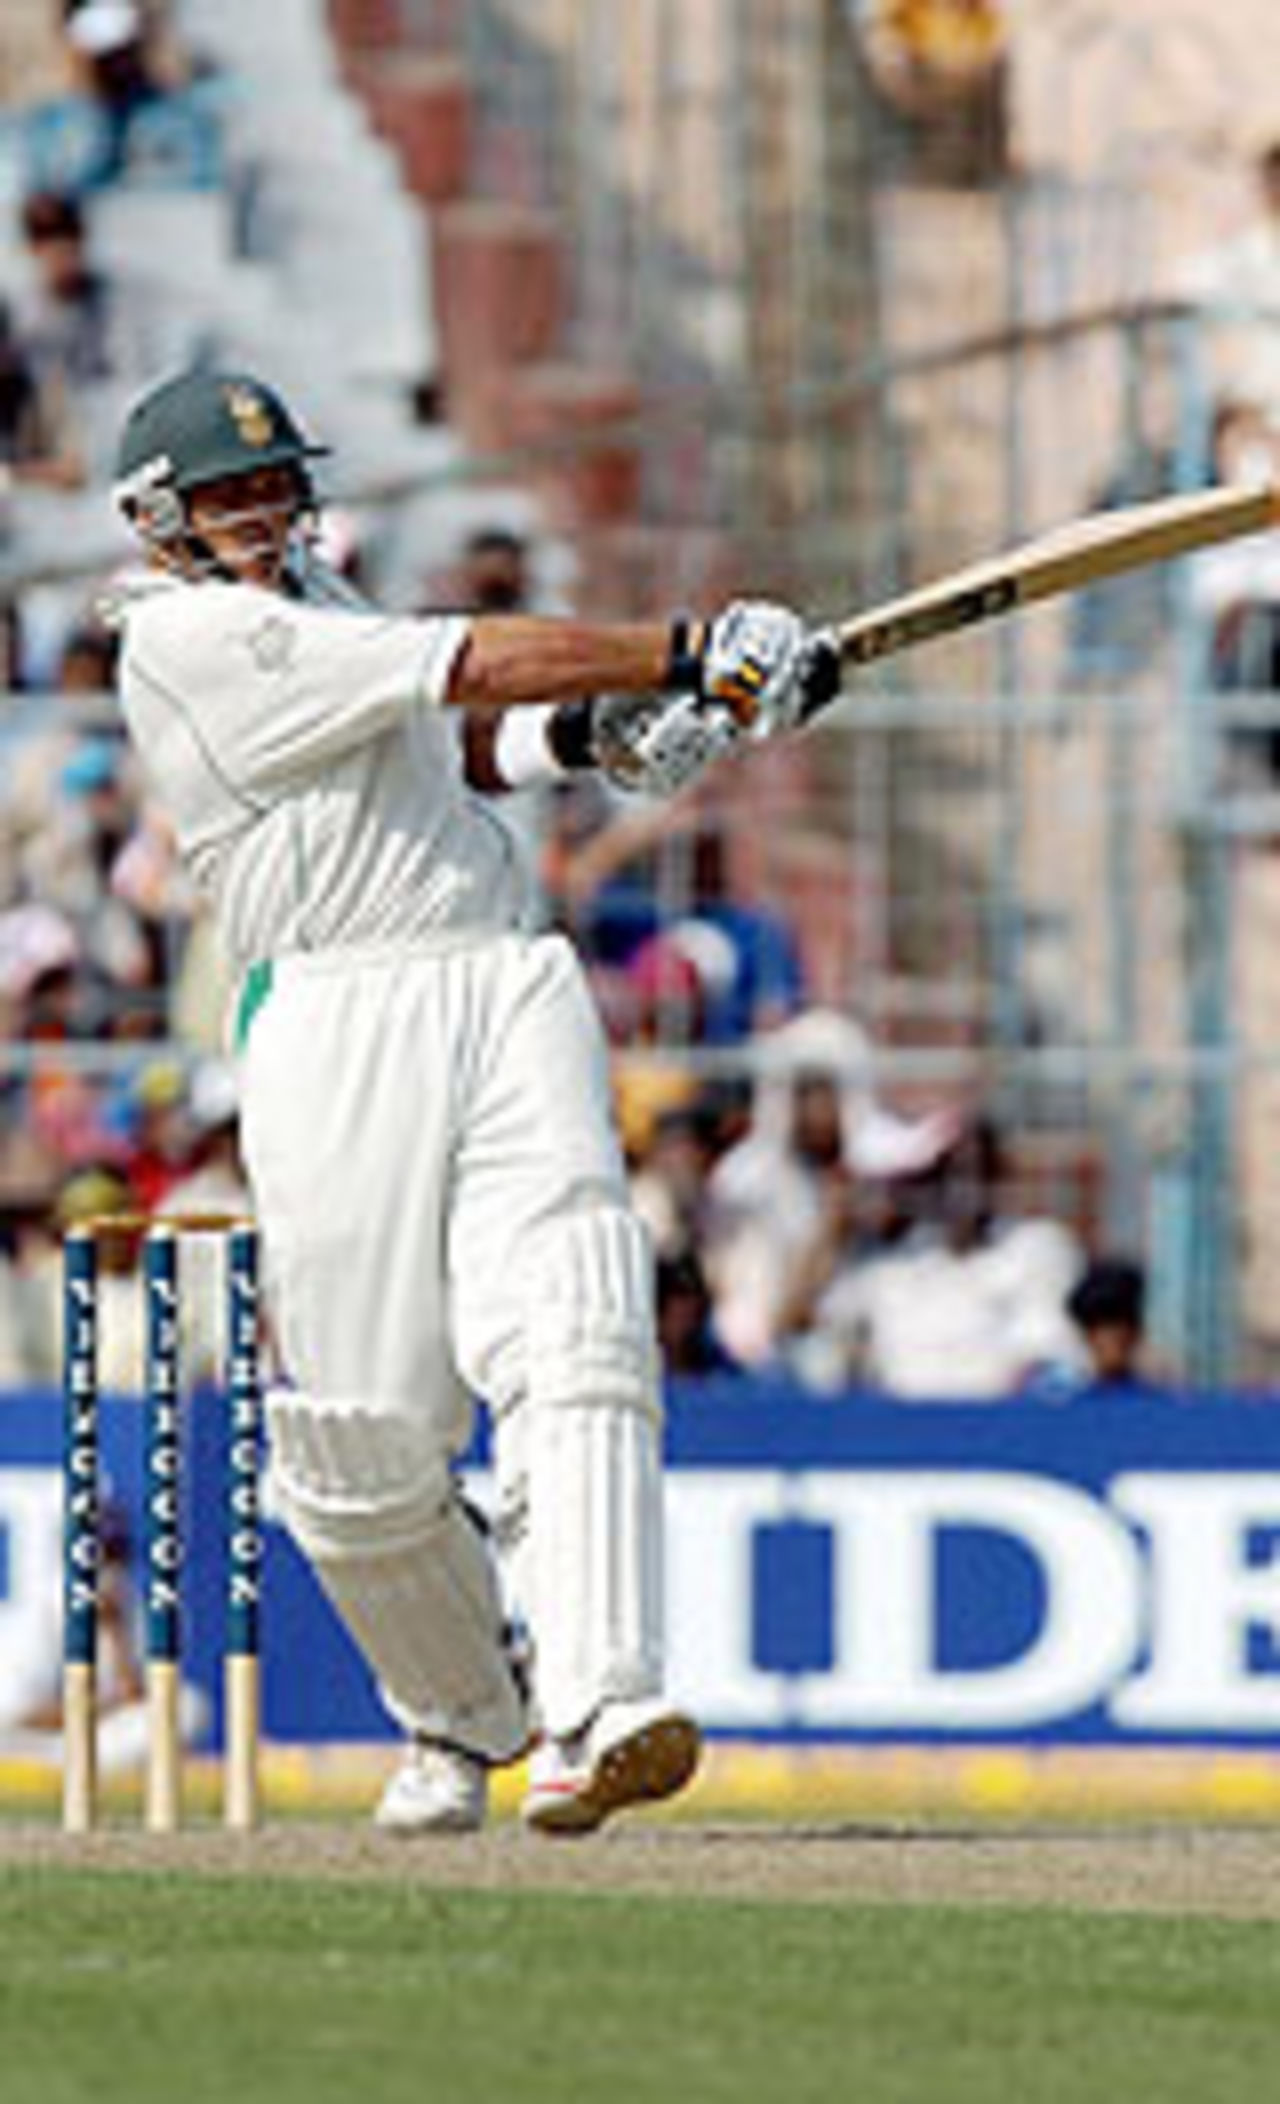 Jacques Kallis on song, India v South Africa, 2nd Test, Kolkata, 1st day, November 28, 2004